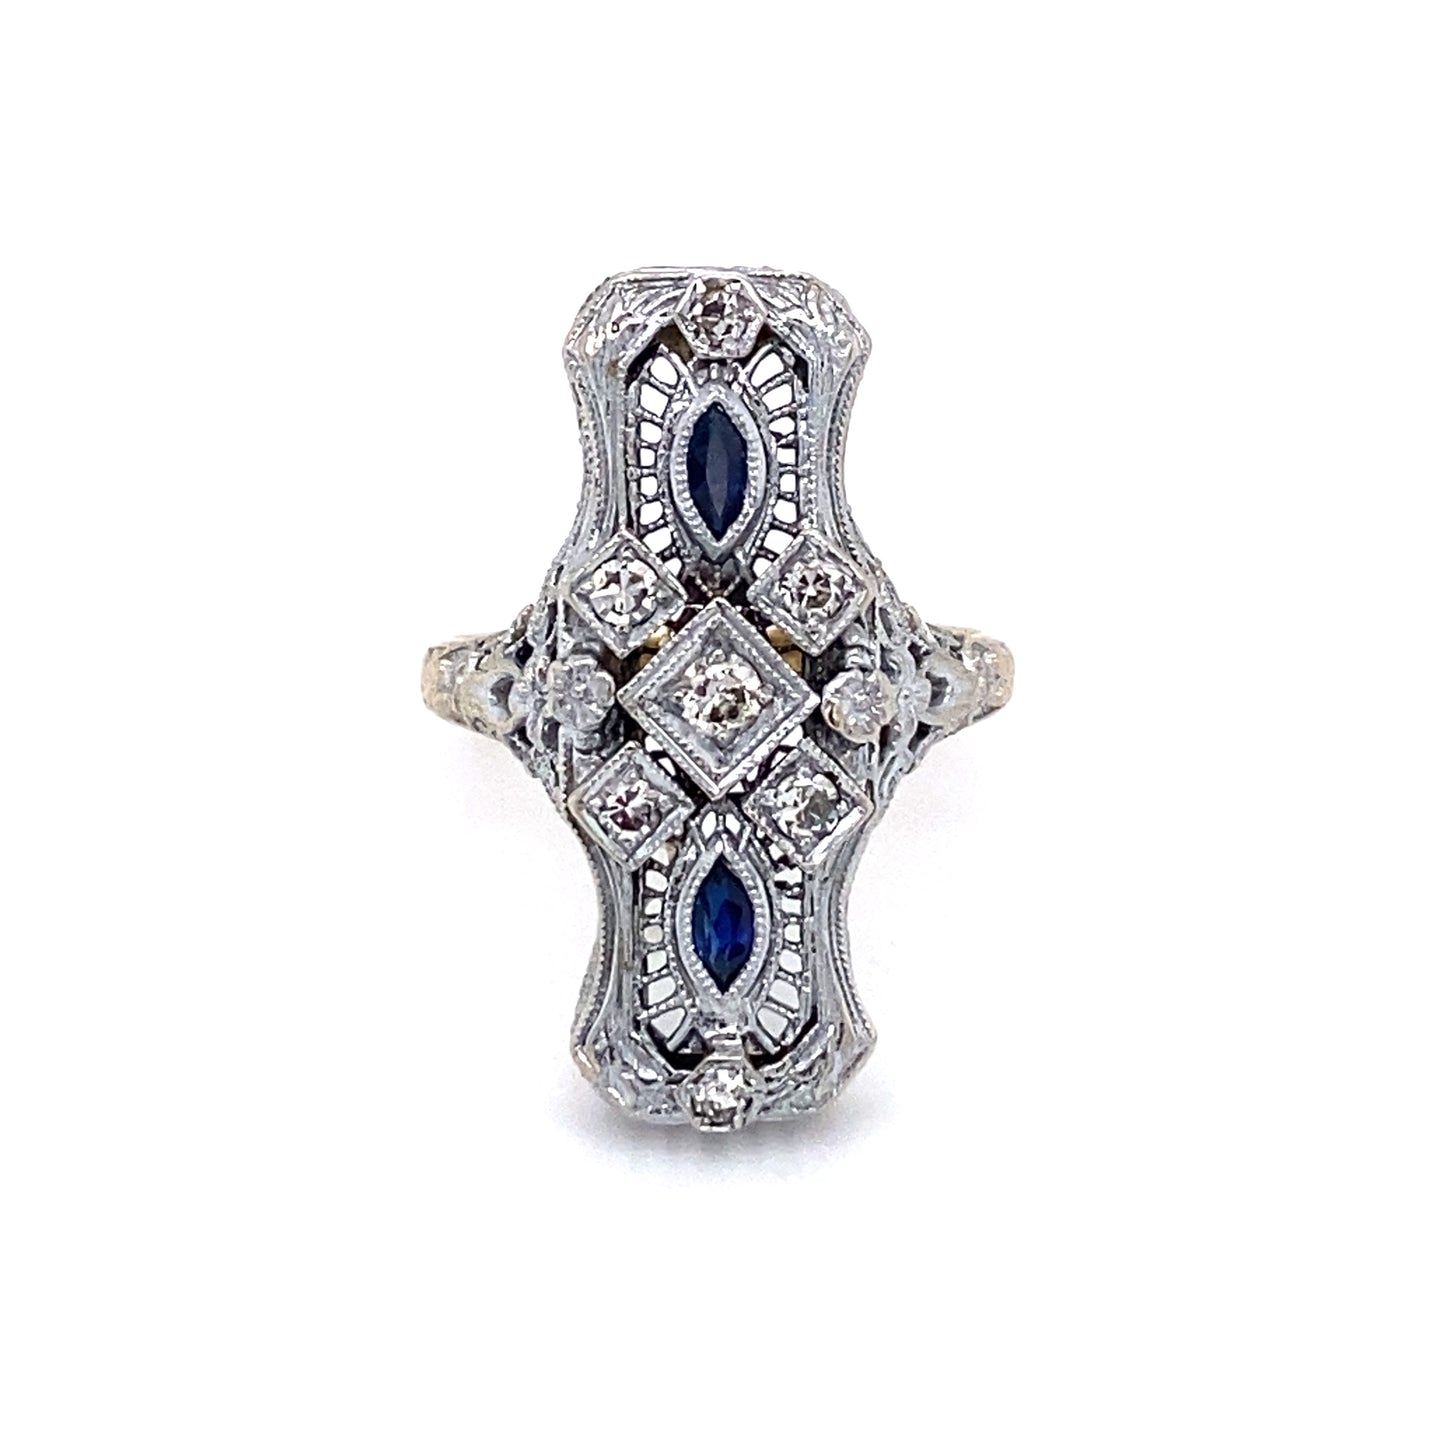 Circa 1920s Art Deco Elongated Filigree Sapphire Ring in Platinum and 18K Gold